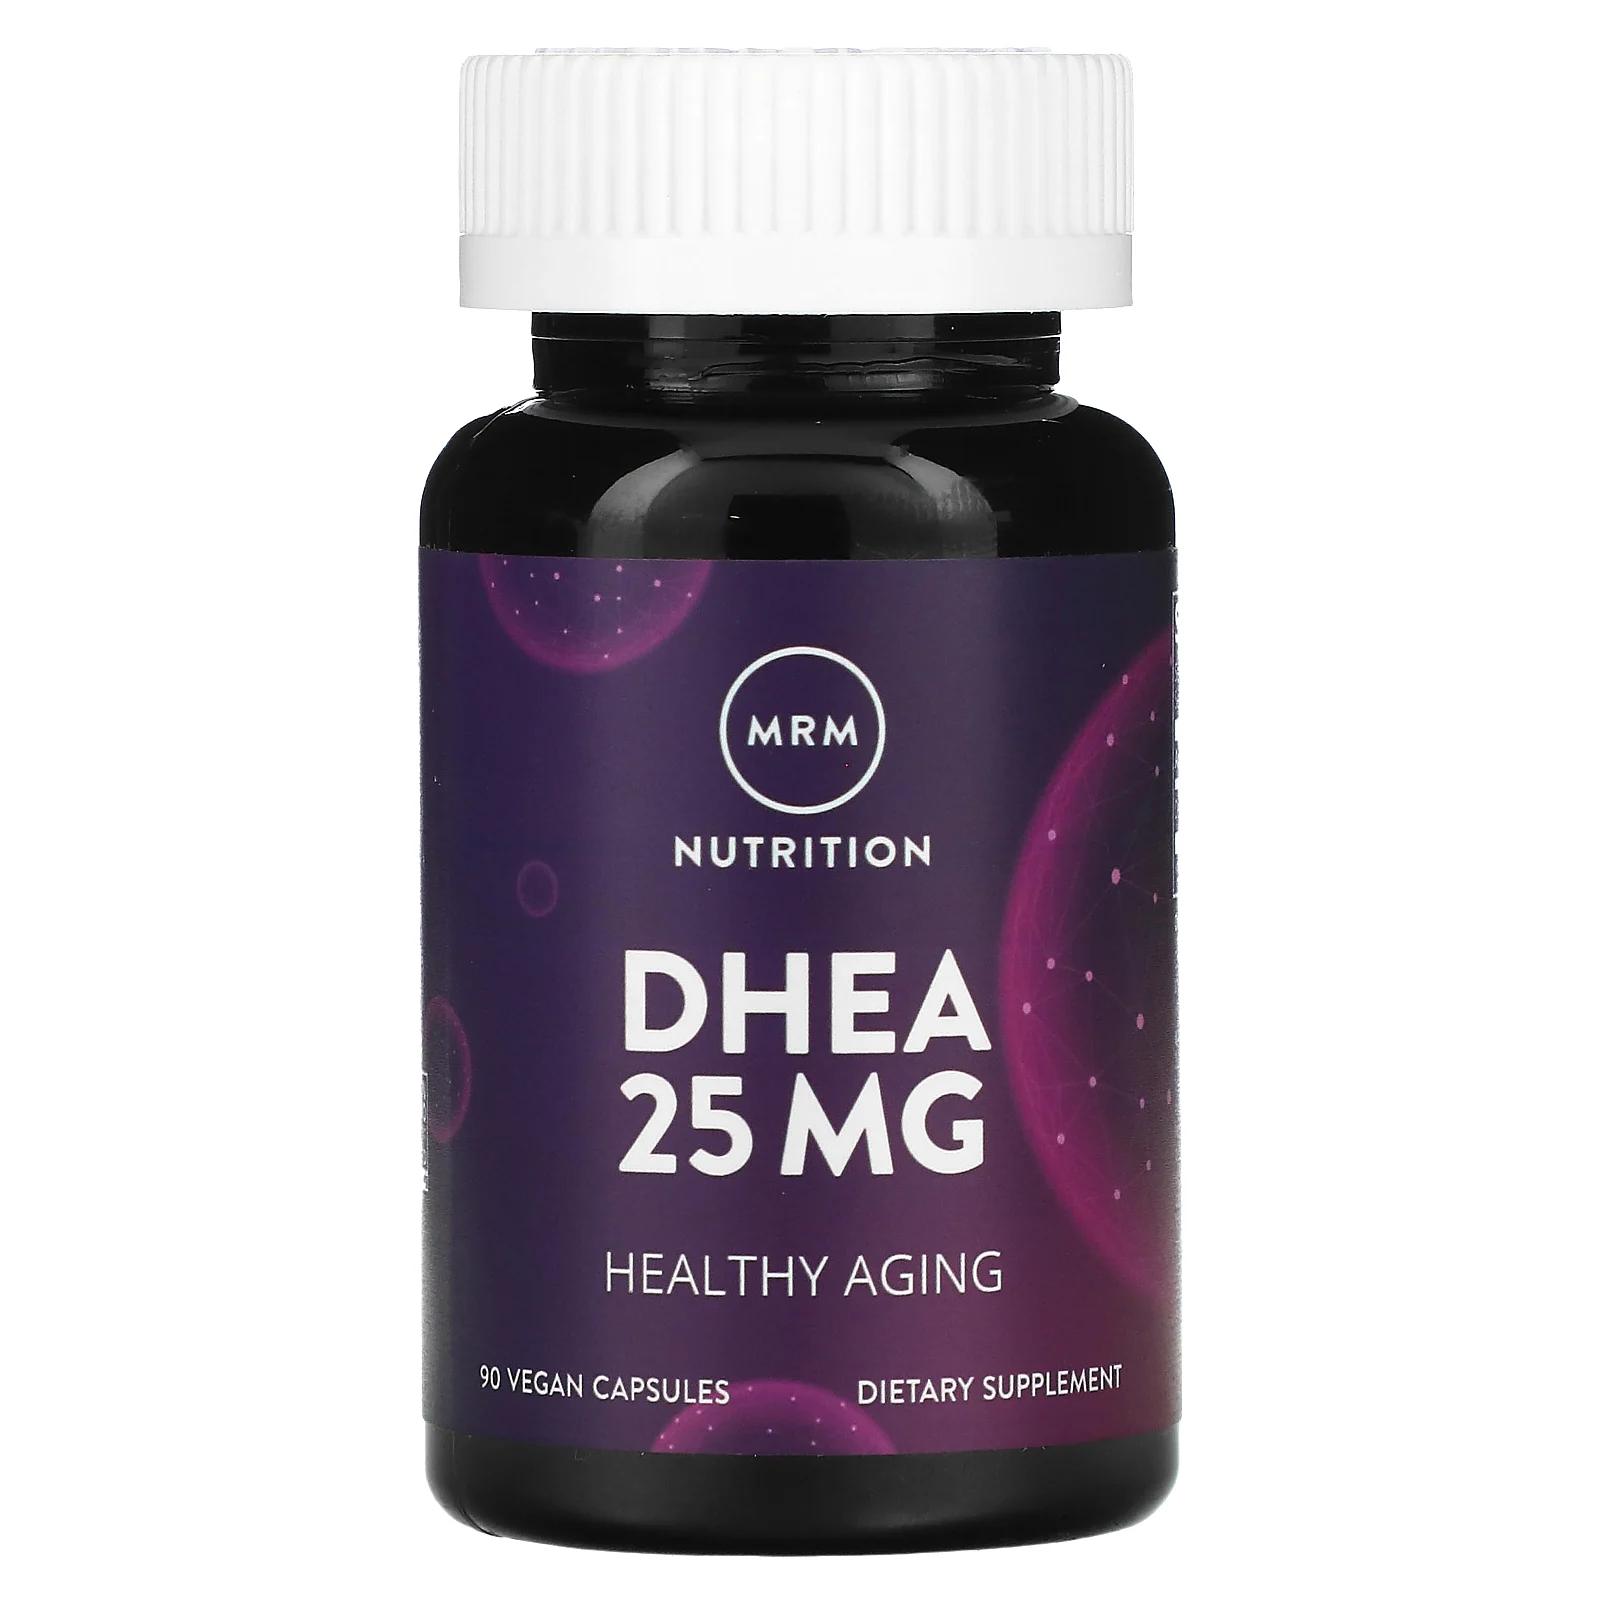 MRM DHEA (25 мг) 90 вег капсул mrm nutrition дгэа 25 мг 90 вегетарианских капсул